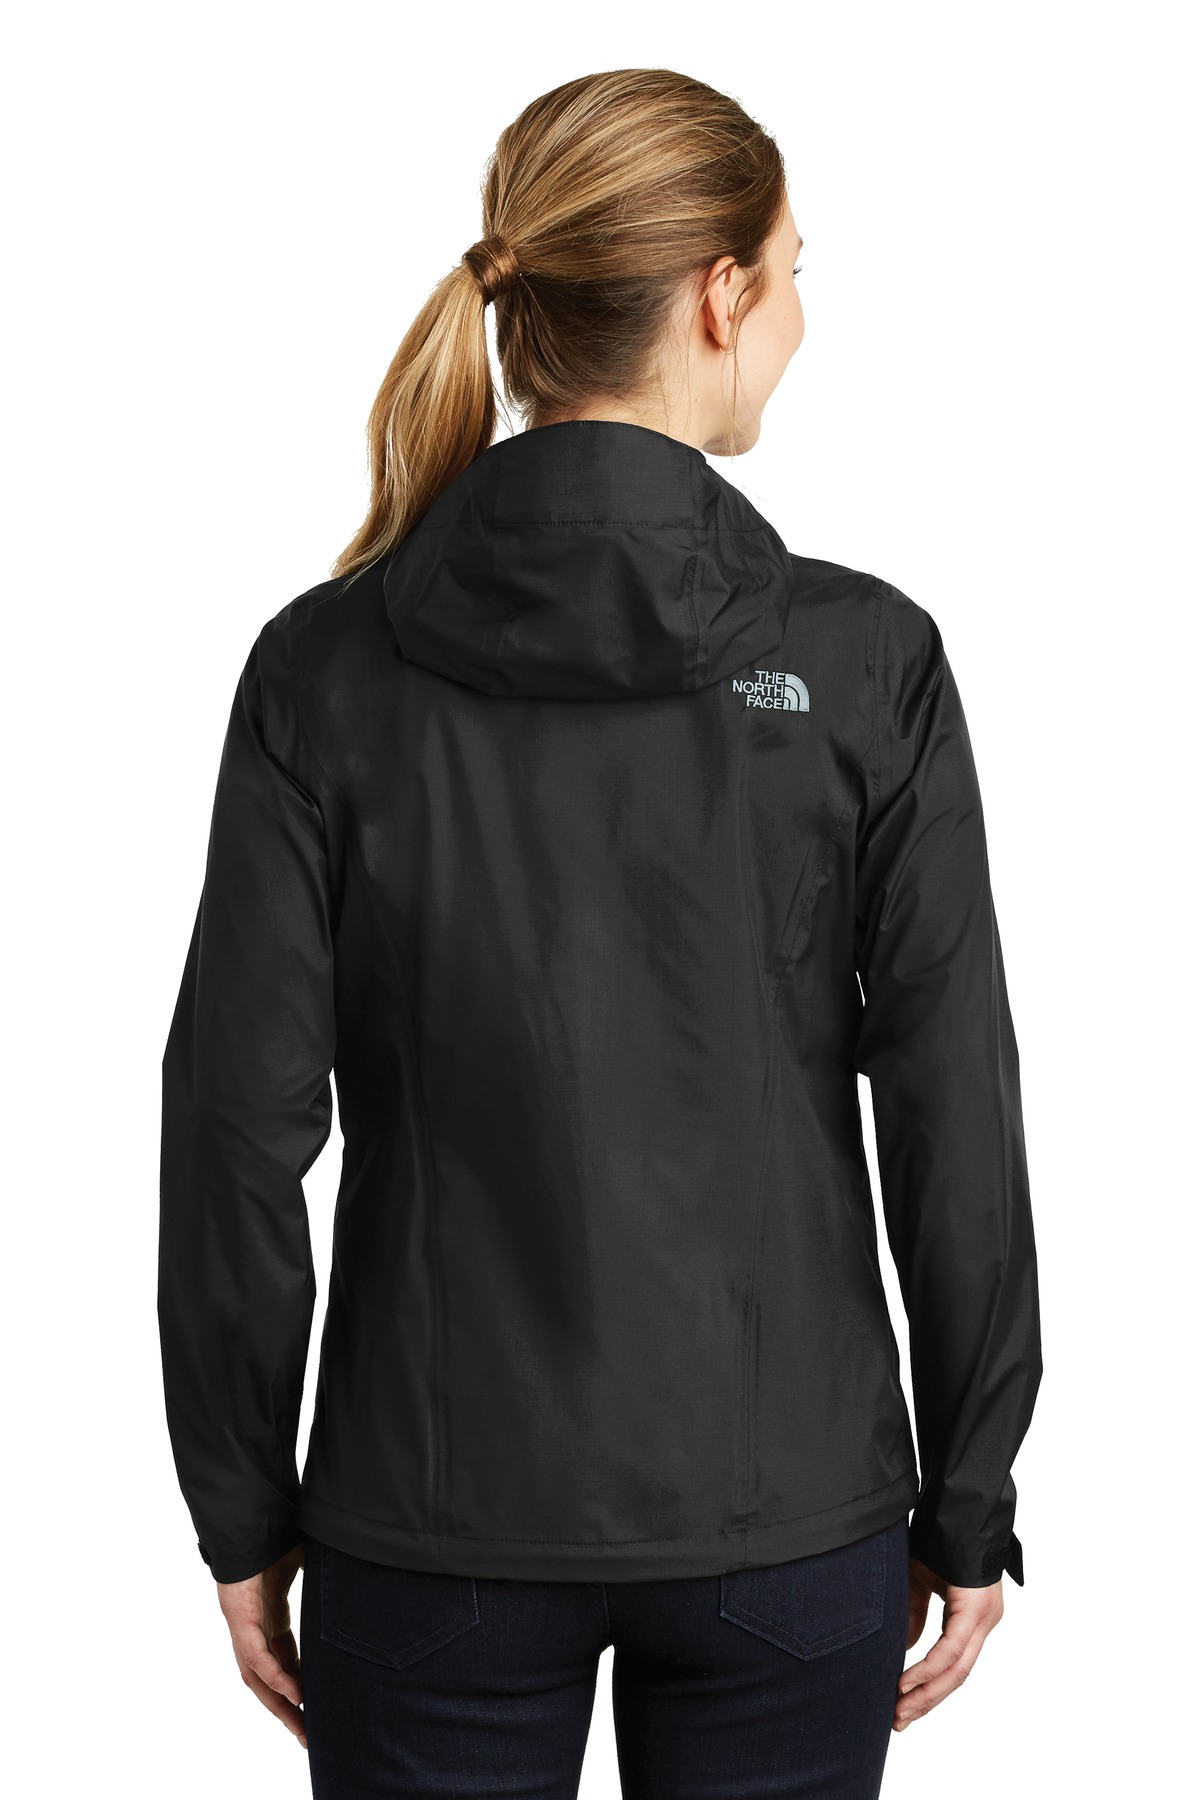 The North Face ® Ladies DryVent ™ Rain Jacket. NF0A3LH5 - Custom Shirt Shop